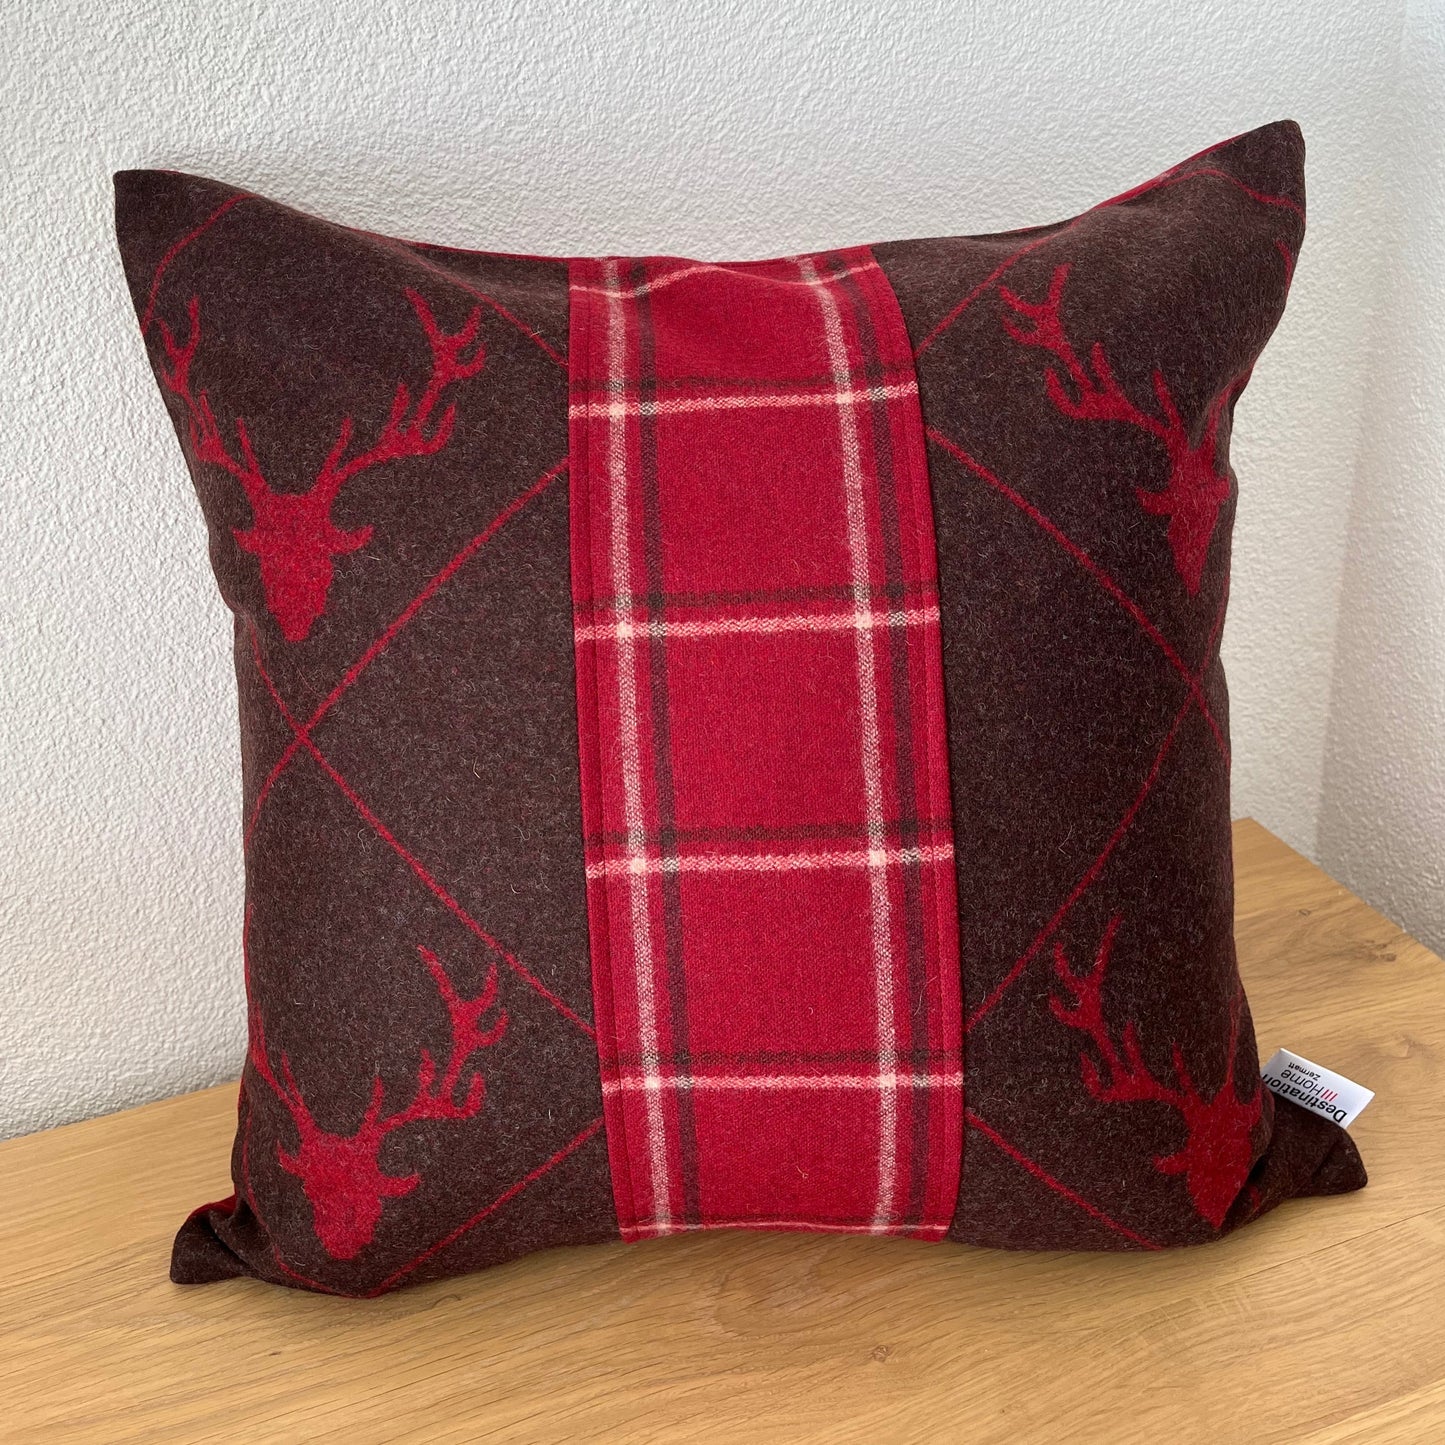 Deer design cushion cover, check pattern centered, grey/beige